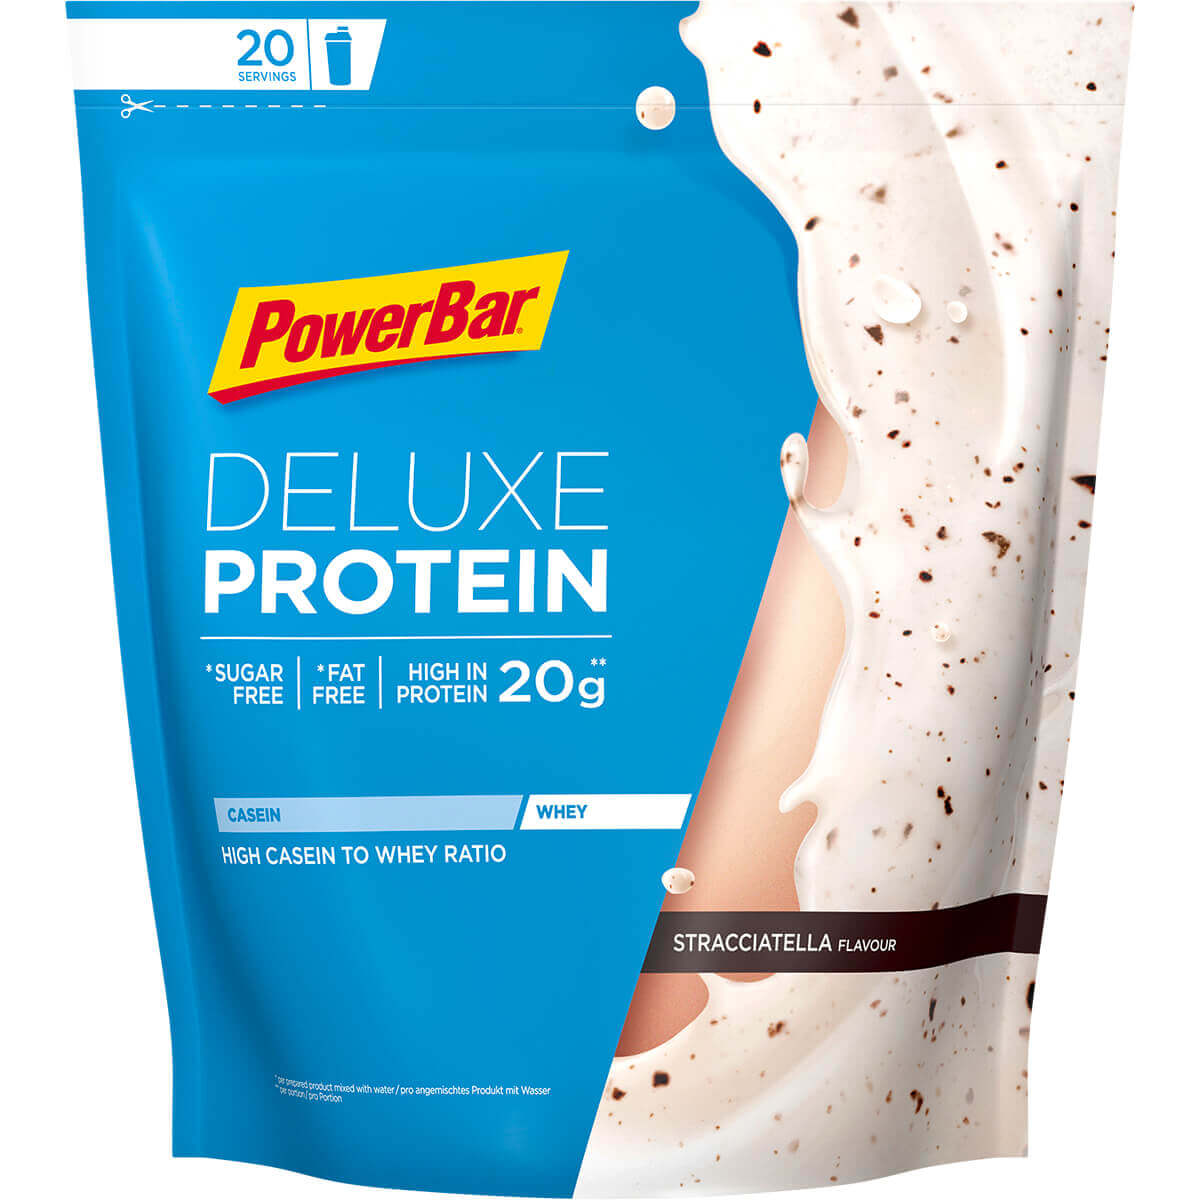 Deluxe Protein